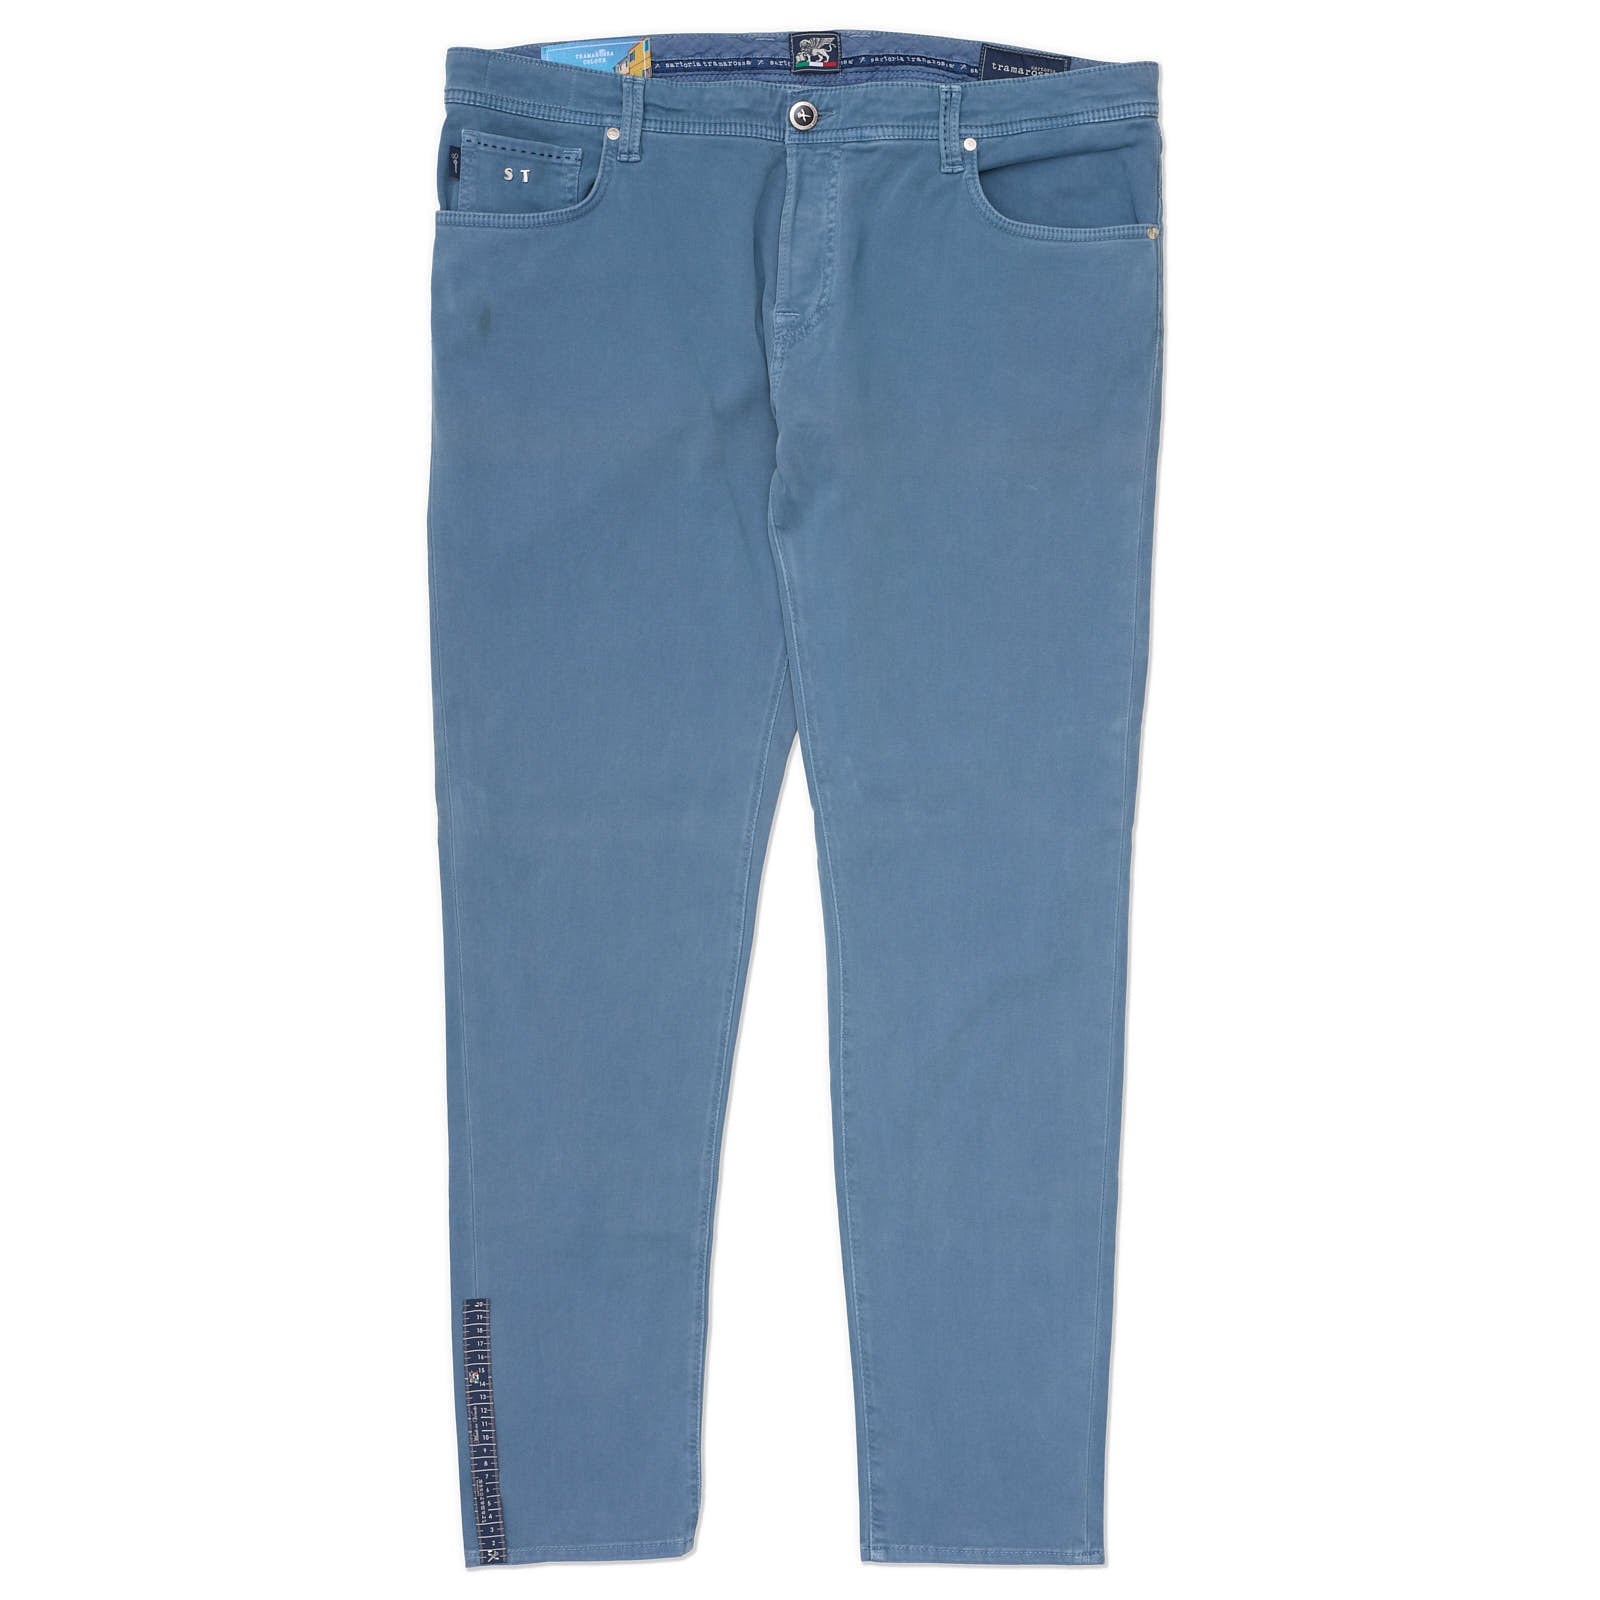 TRAMAROSSA "Leonardo" Washed Blue Cotton Stretch Slim Fit Jeans NEW US 42